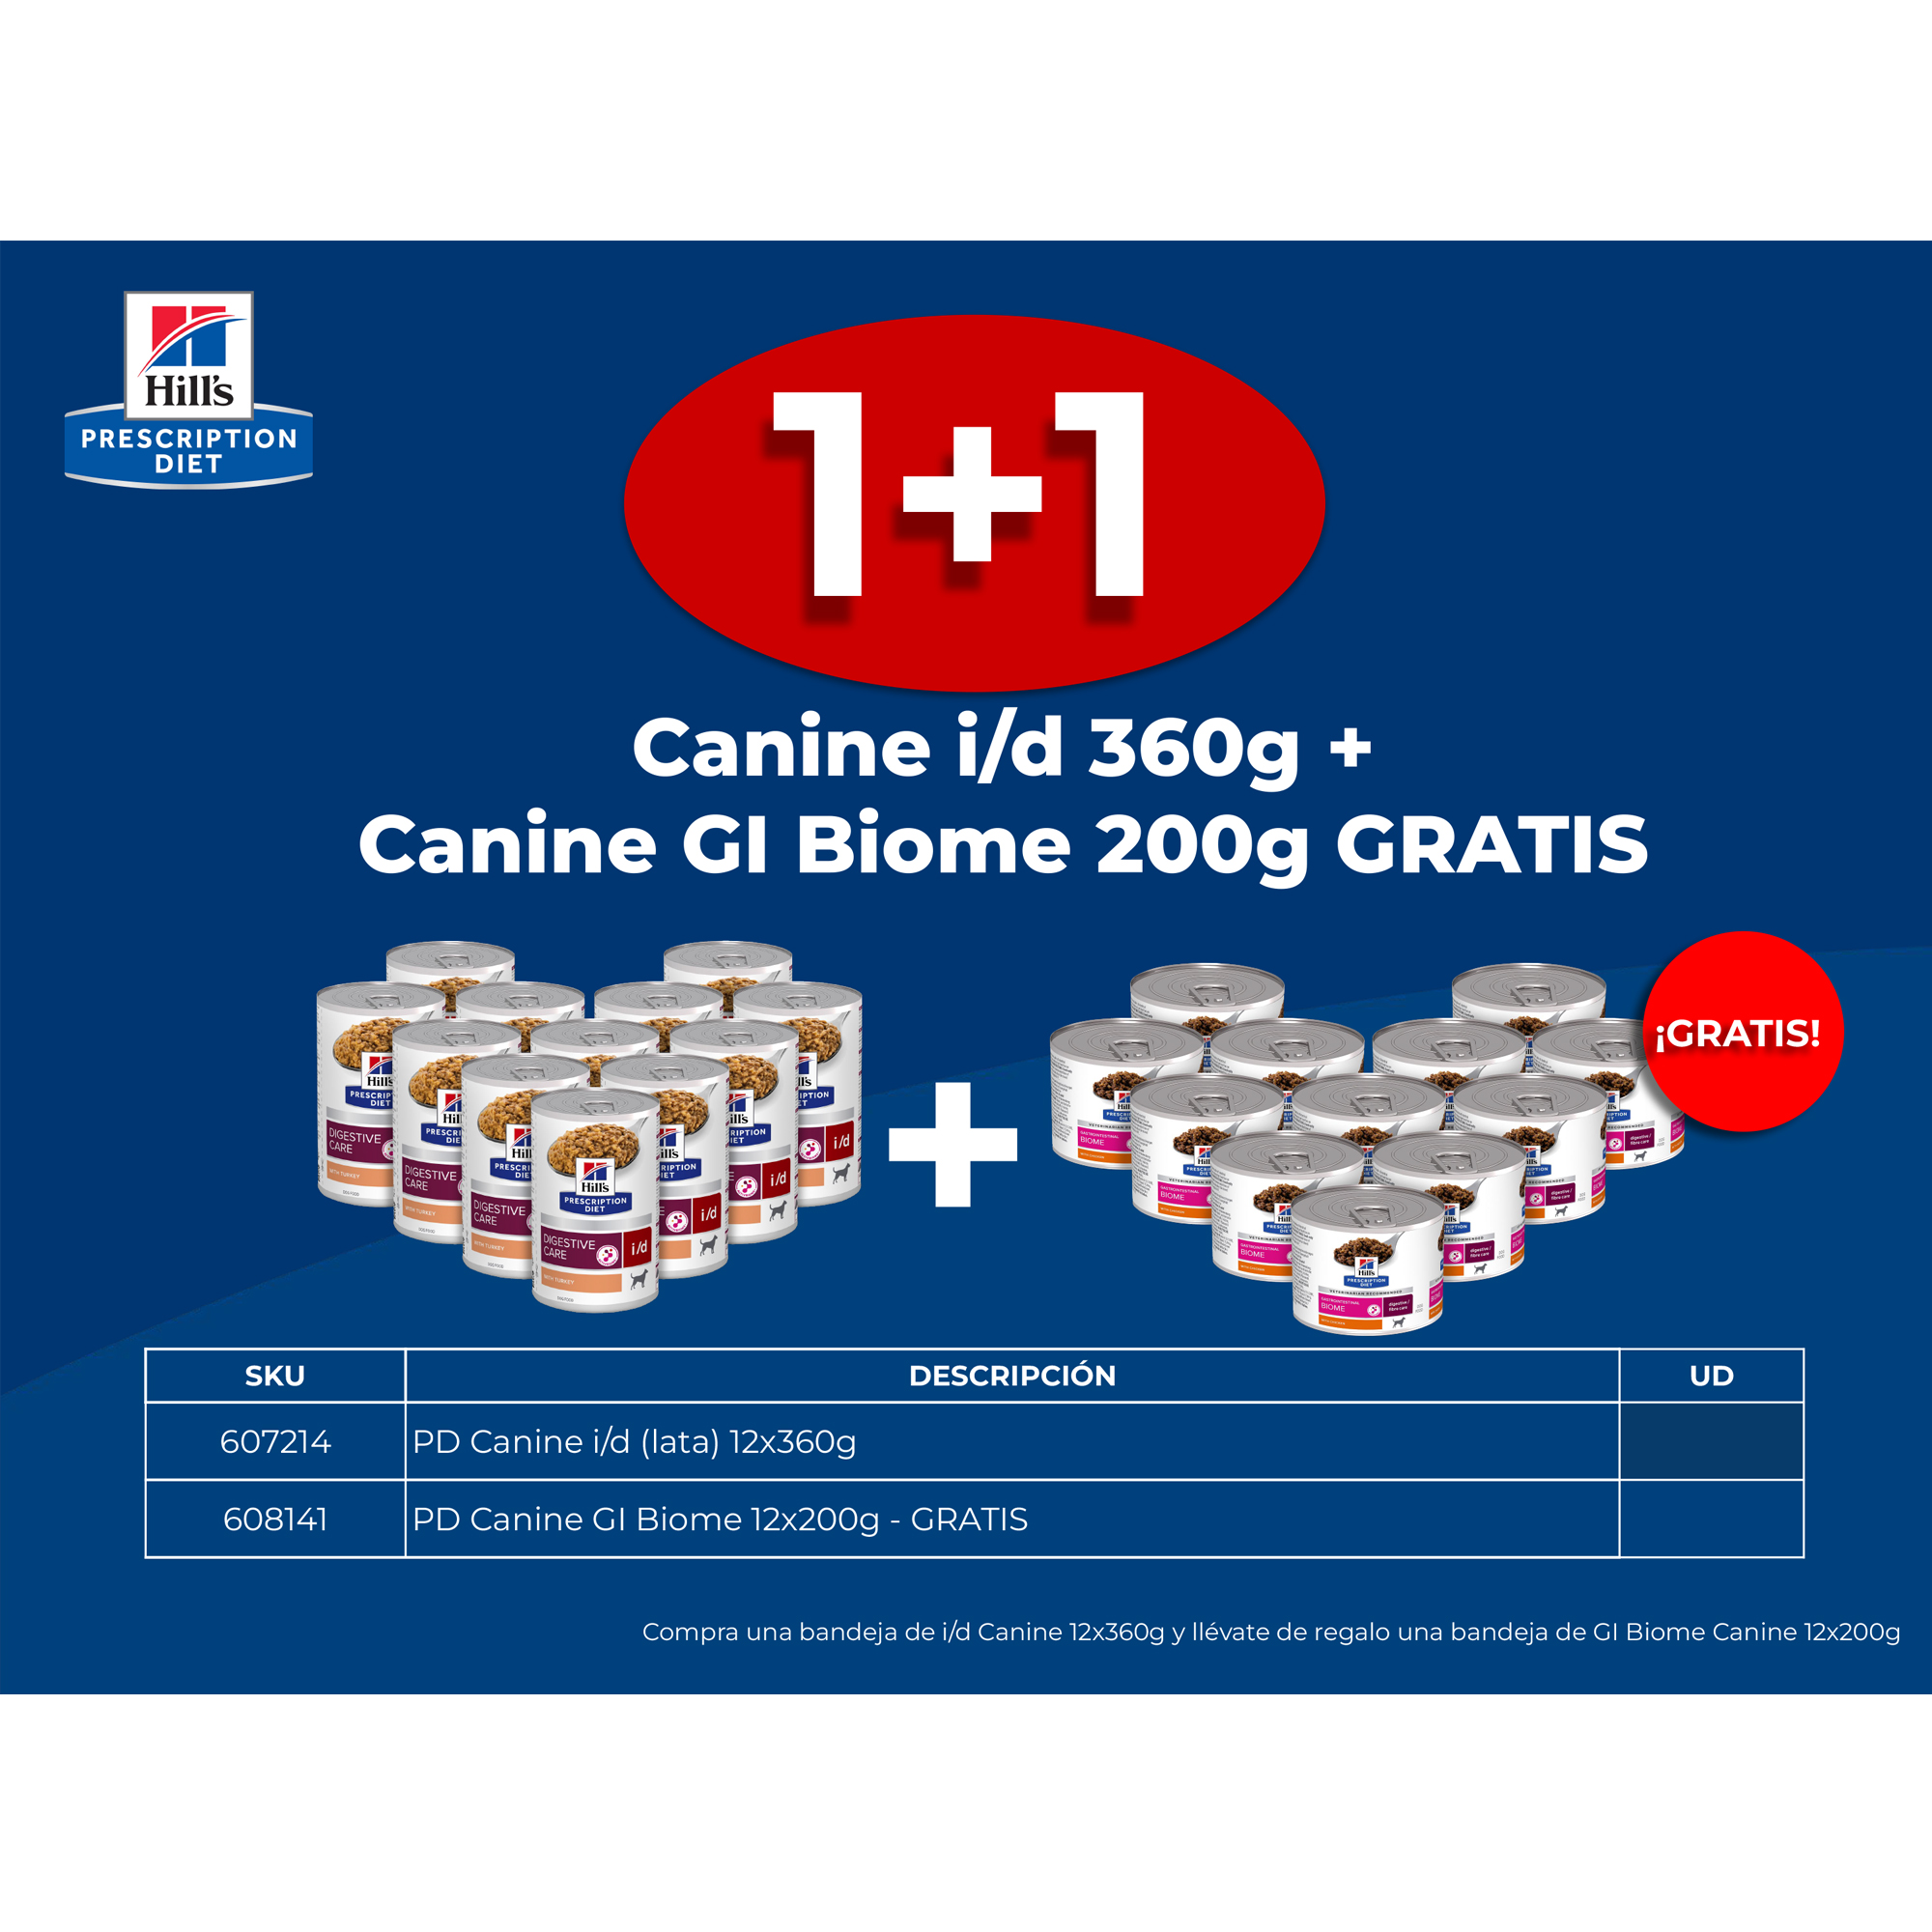 1+1 Canine i/d 360g + Canine GI Biome 200g GRATIS